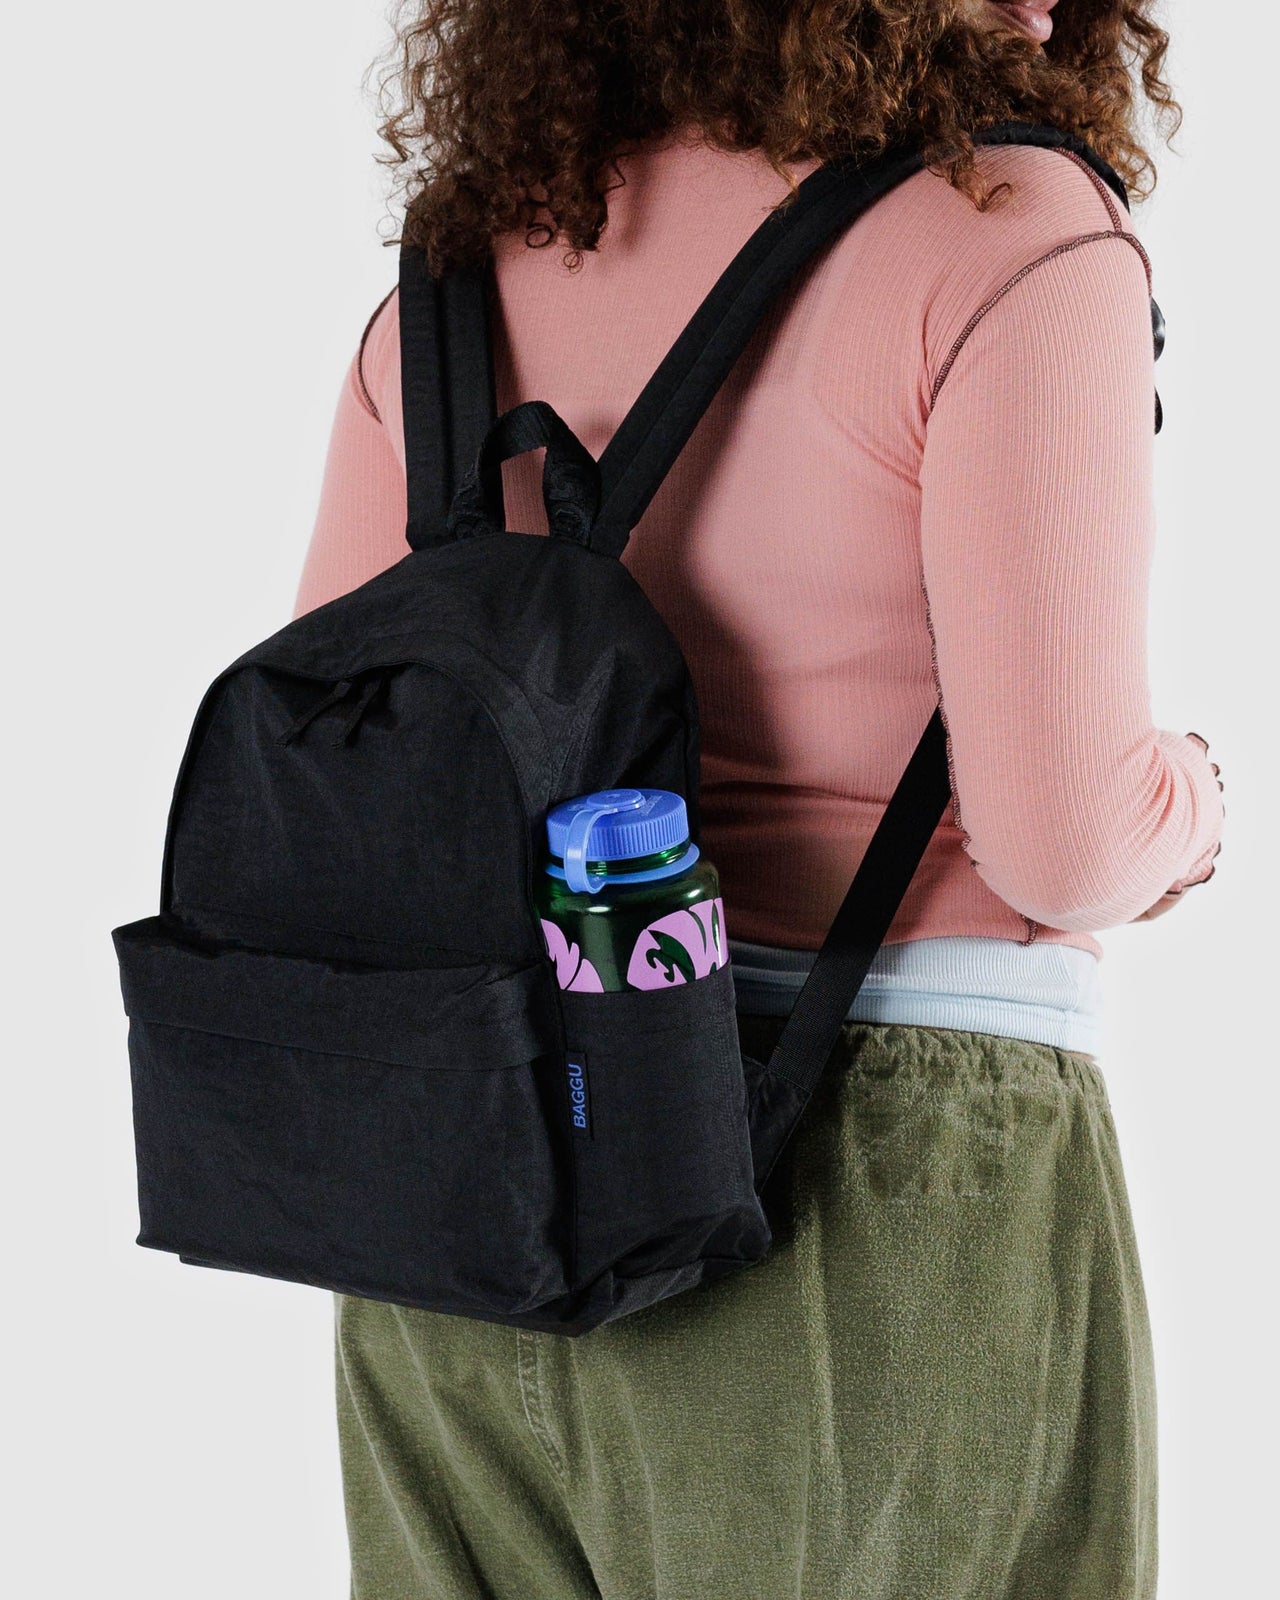 Medium Nylon Backpack - Black